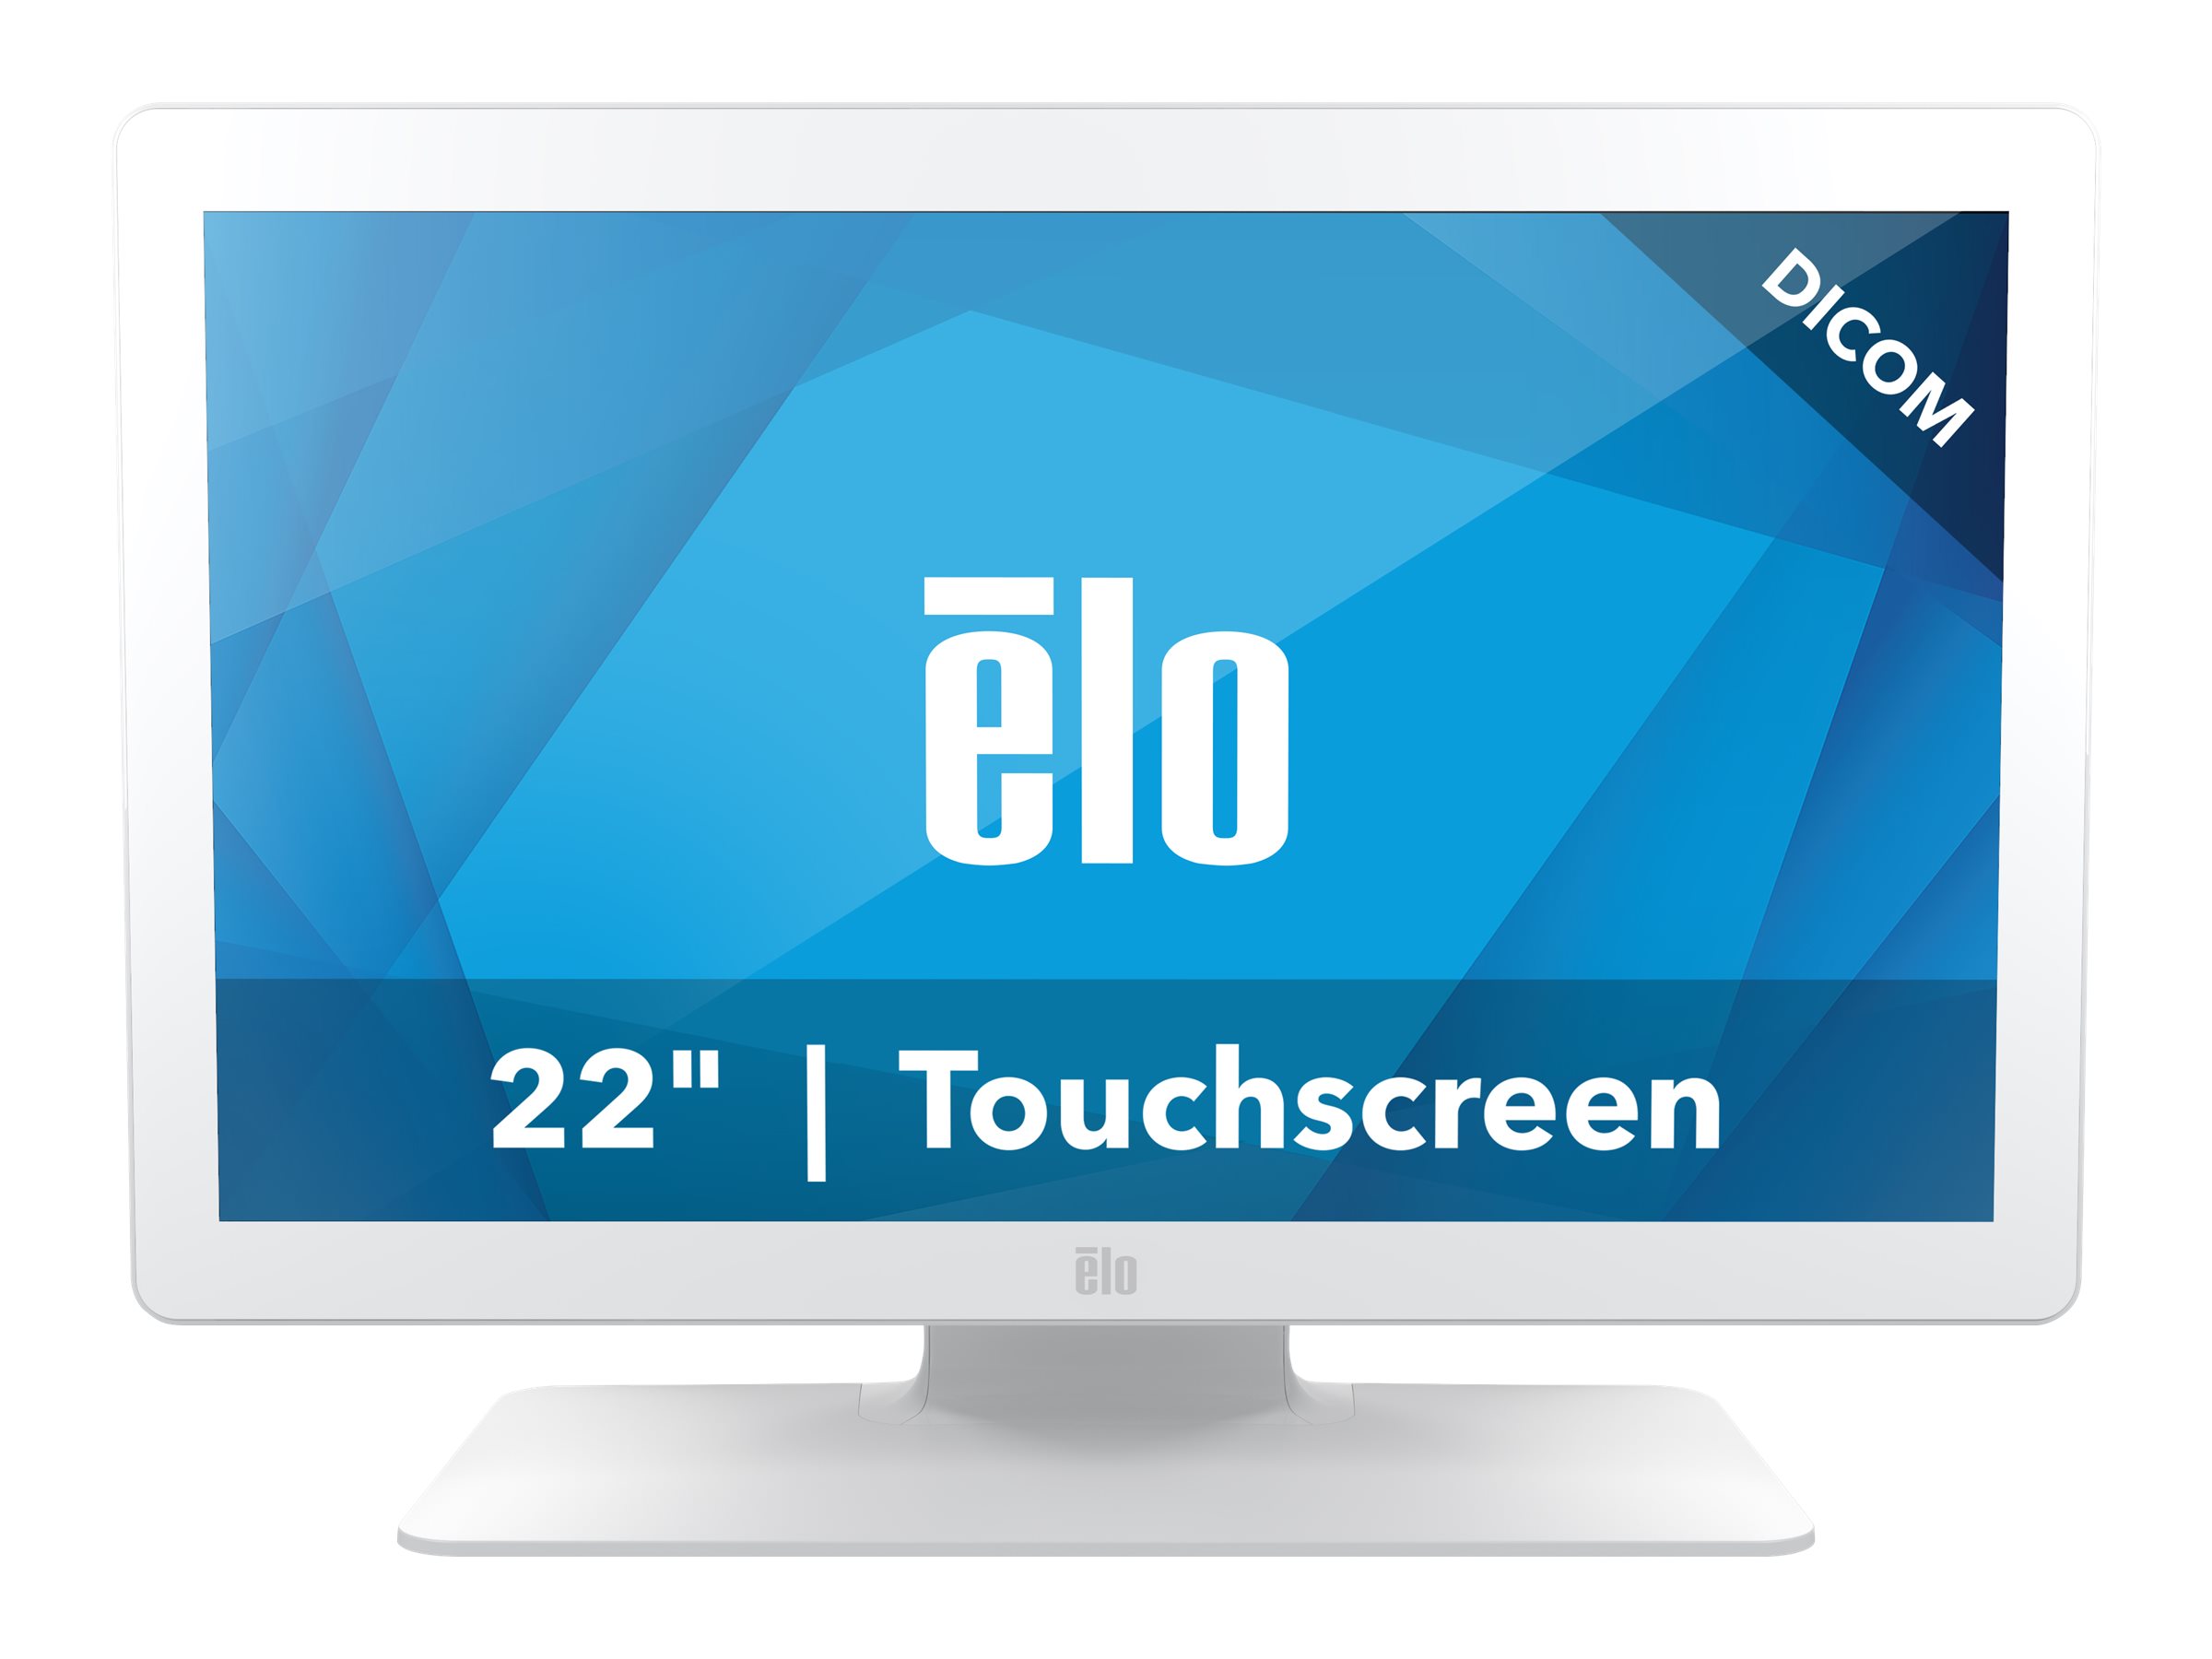 Elo 2203LM - Medical Grade - LCD-Monitor - 55.9 cm (22